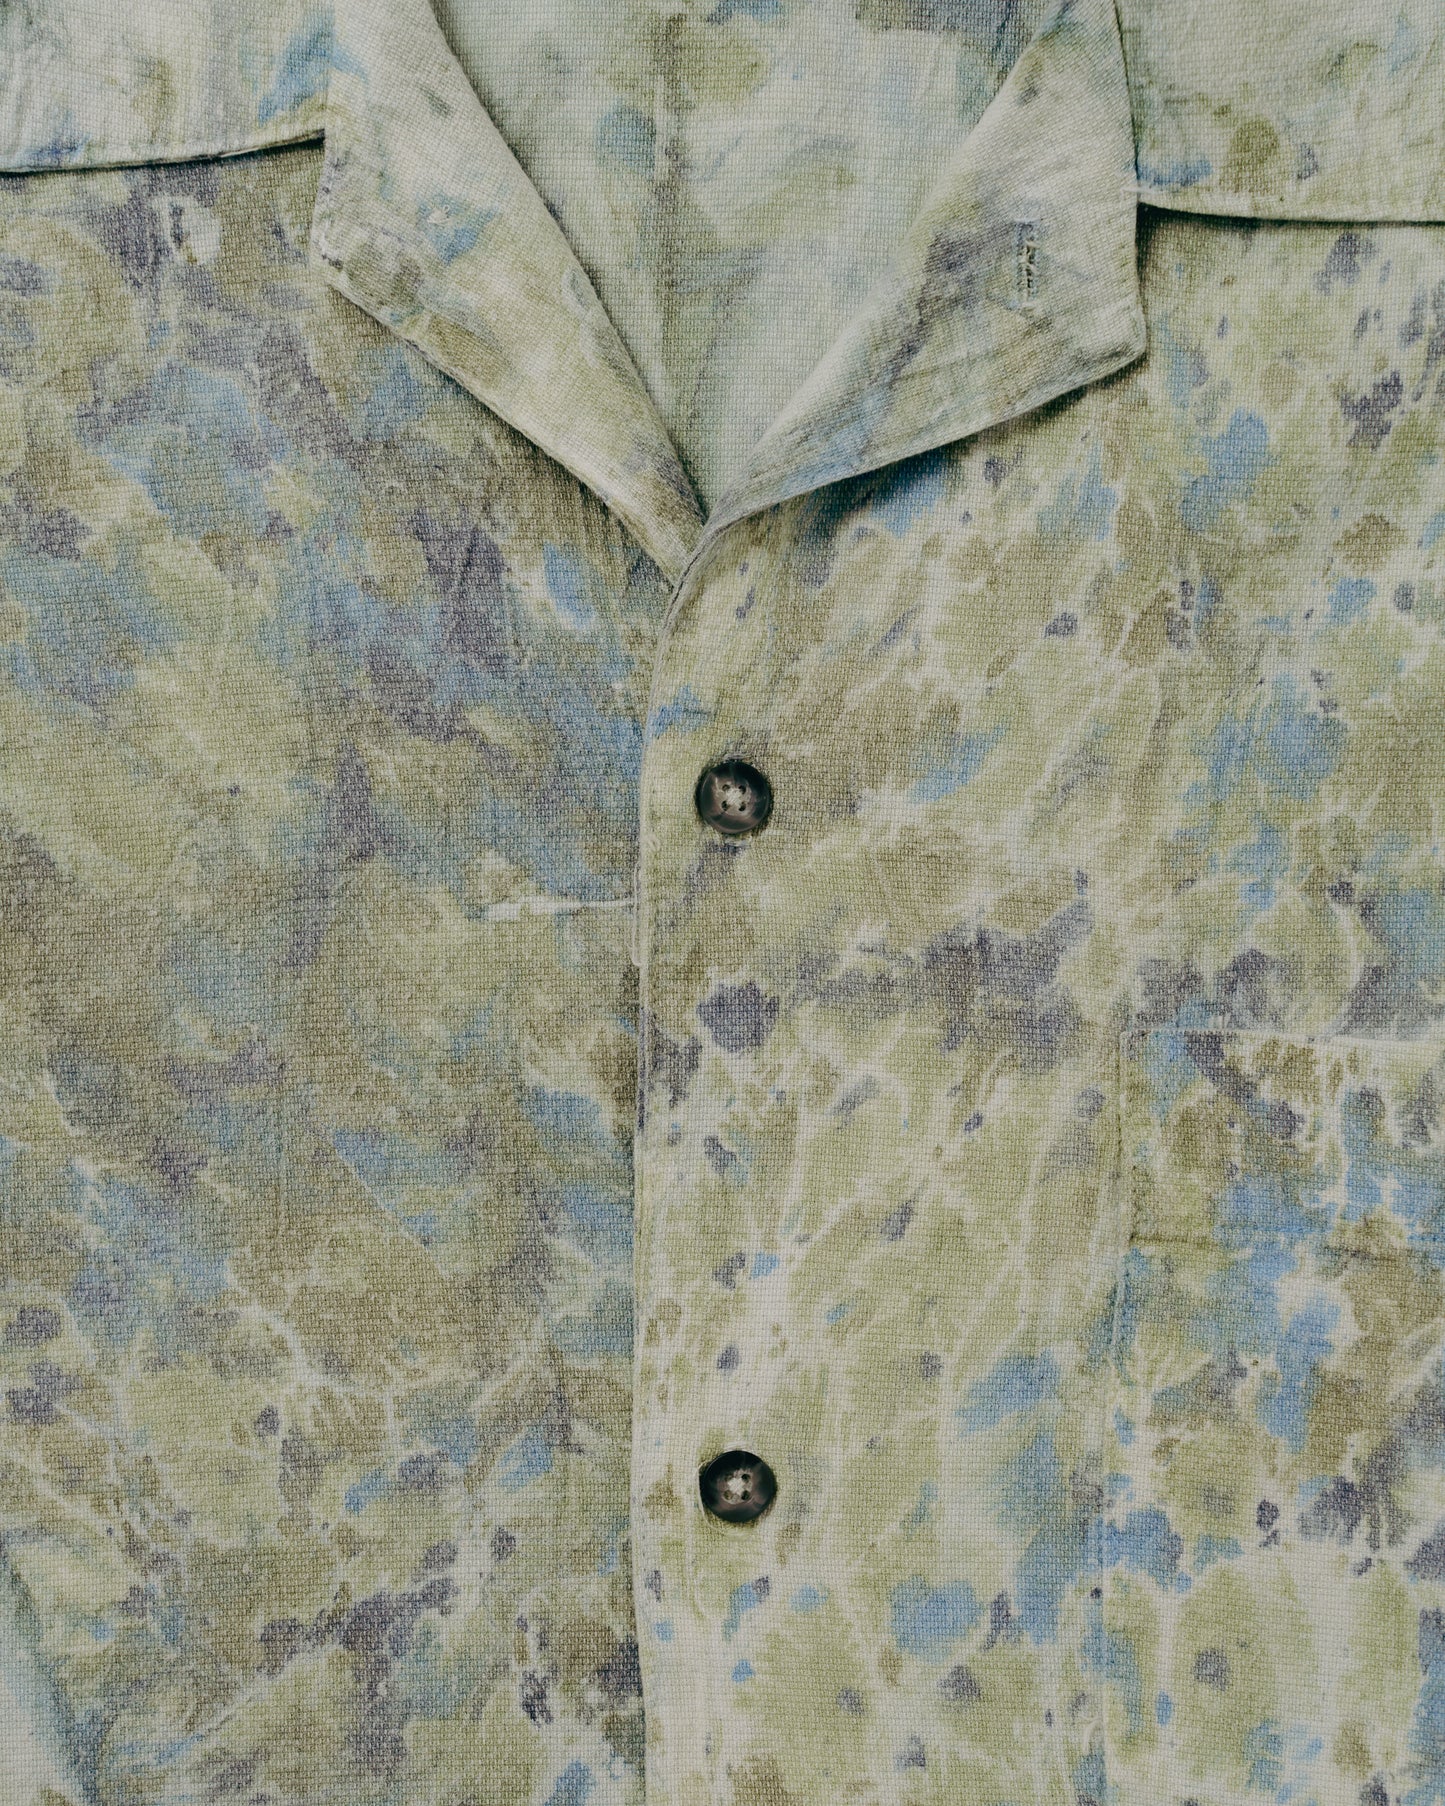 Horizon Crinkle S/S Shirt - Earth Camo